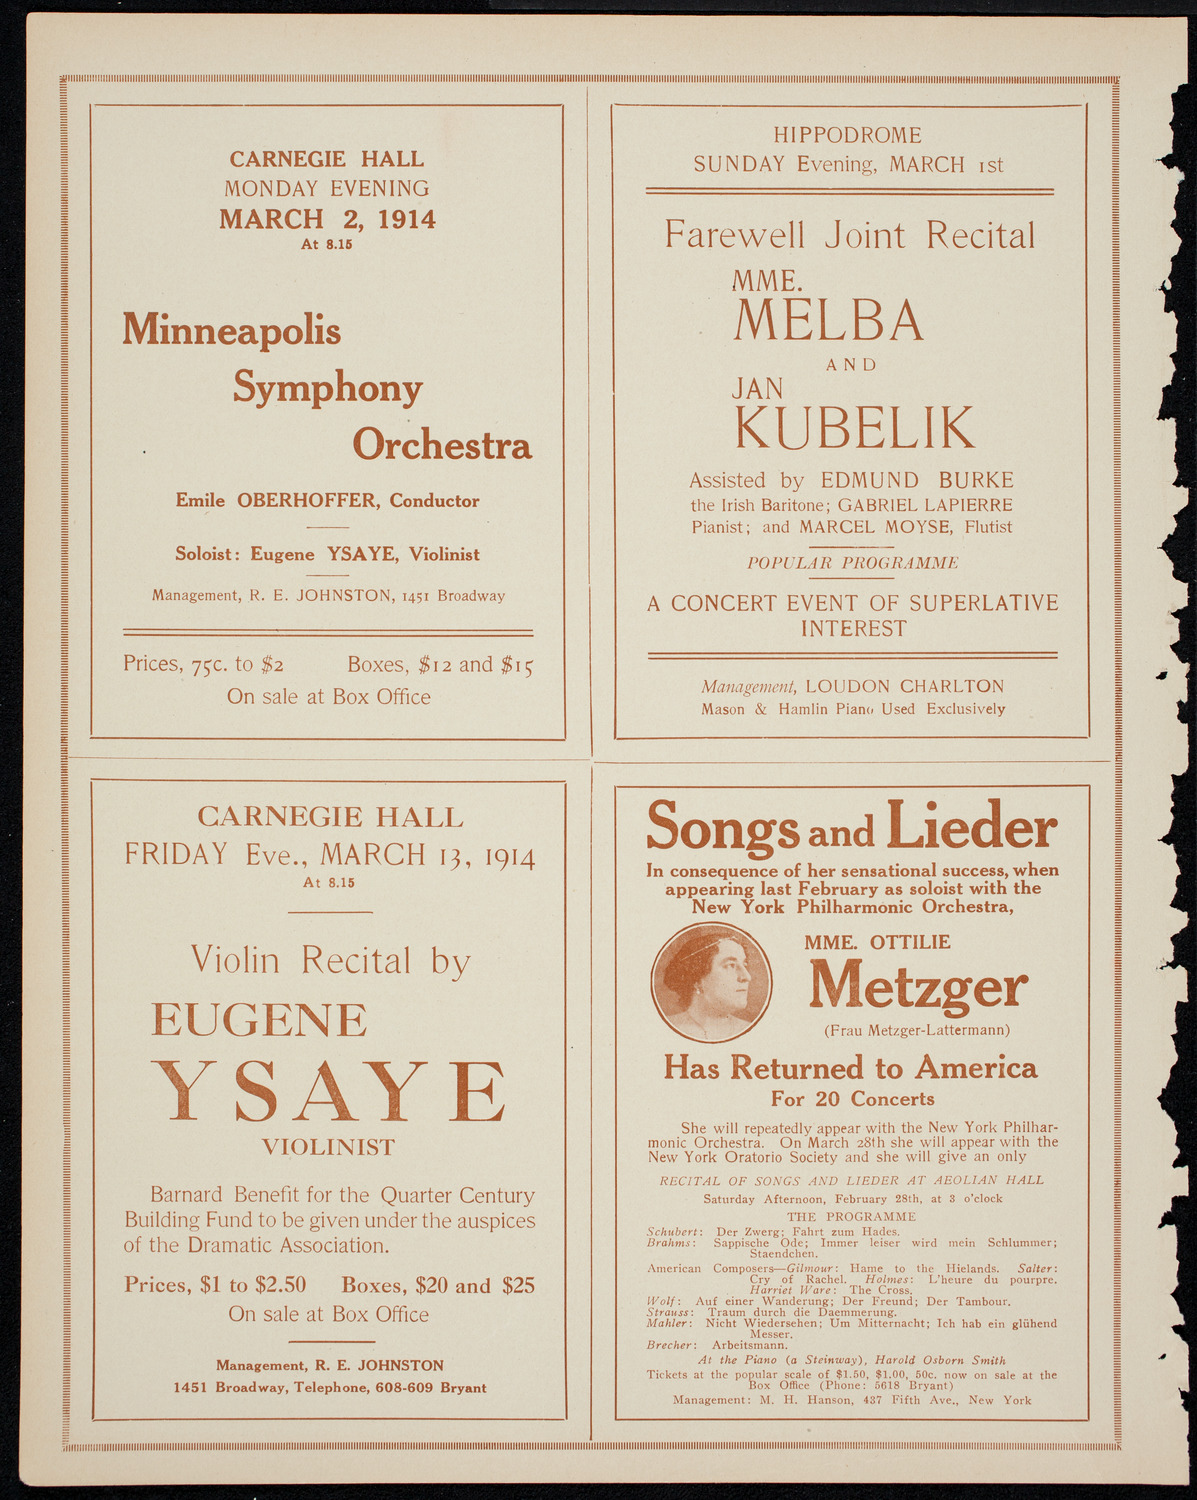 Benefit: New York Red Cross Hospital, February 27, 1914, program page 10